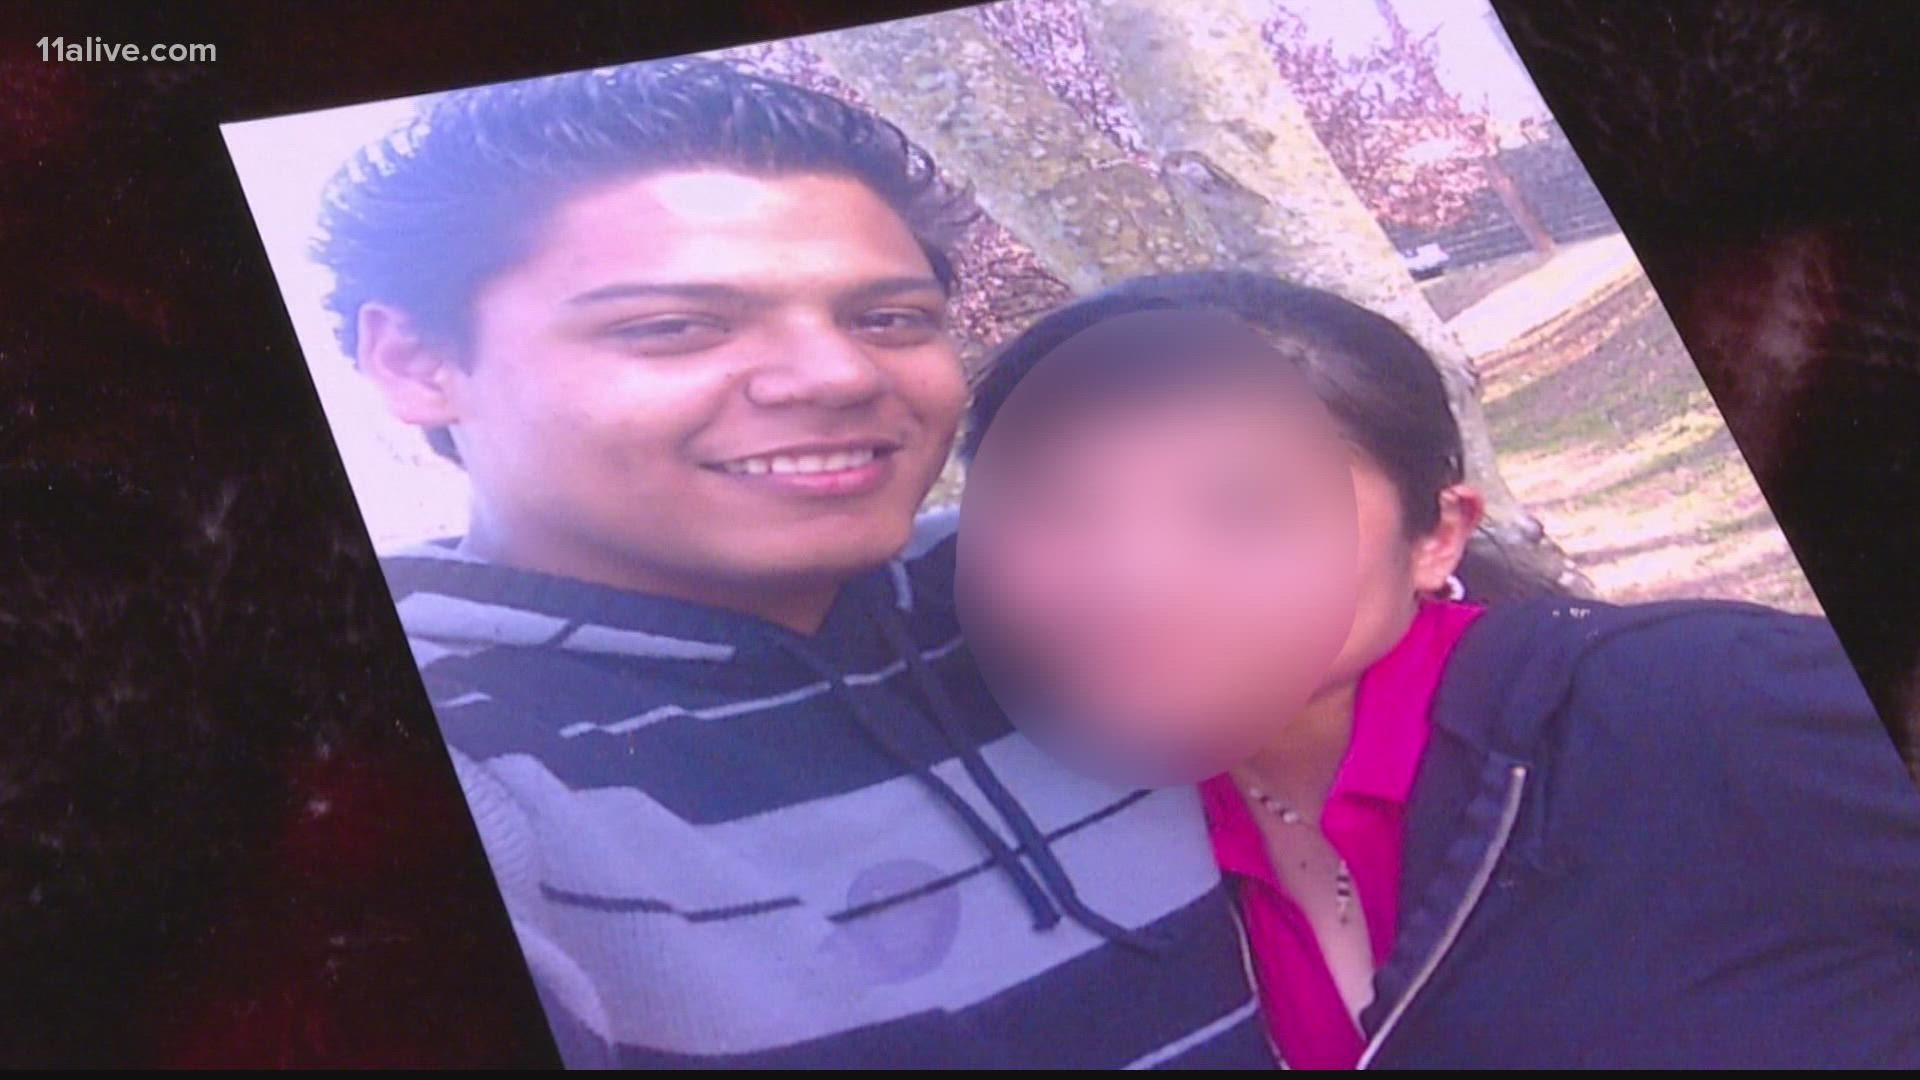 Twenty-nine year old Juan Lopez was shot multiple times in East Point.